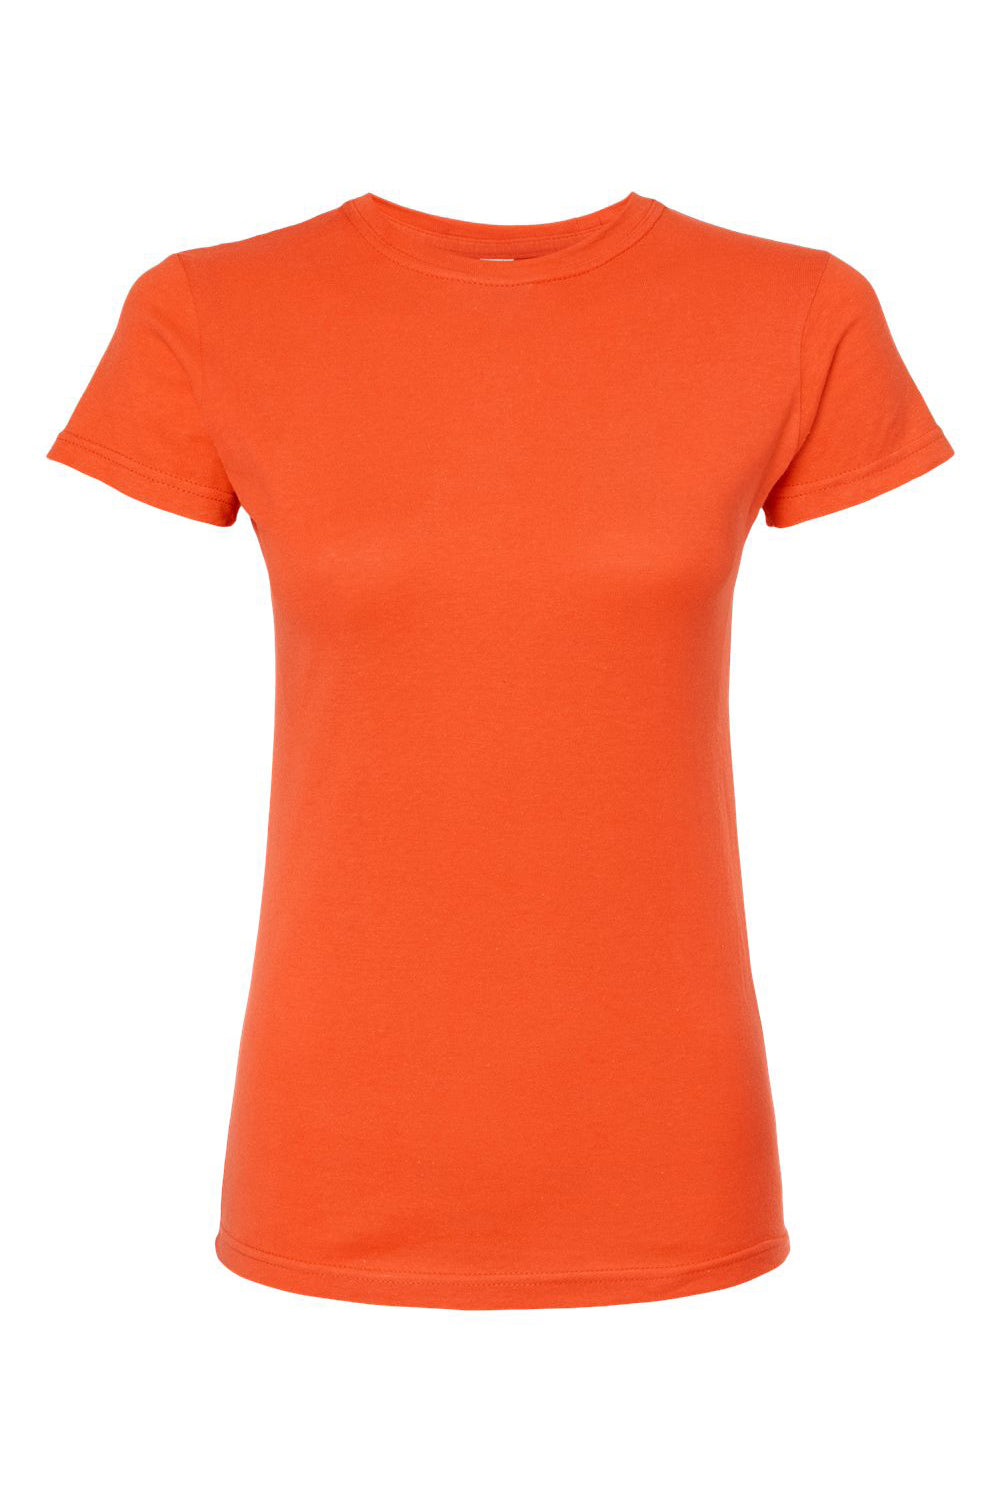 Tultex 213 Womens Fine Jersey Slim Fit Short Sleeve Crewneck T-Shirt Orange Flat Front